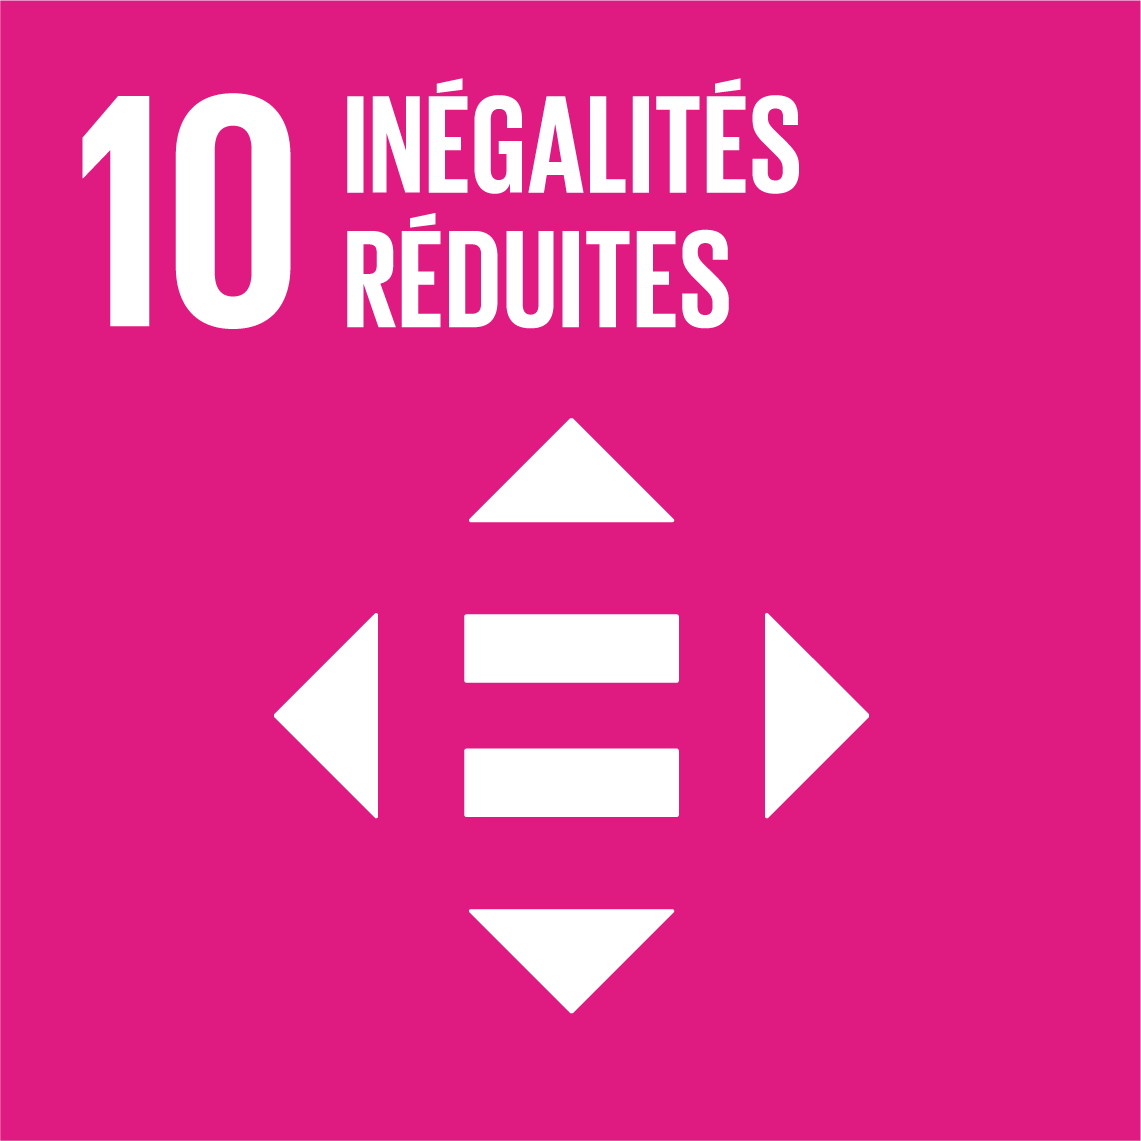 Sustainable Development Goals 10 - Reduced inequalities